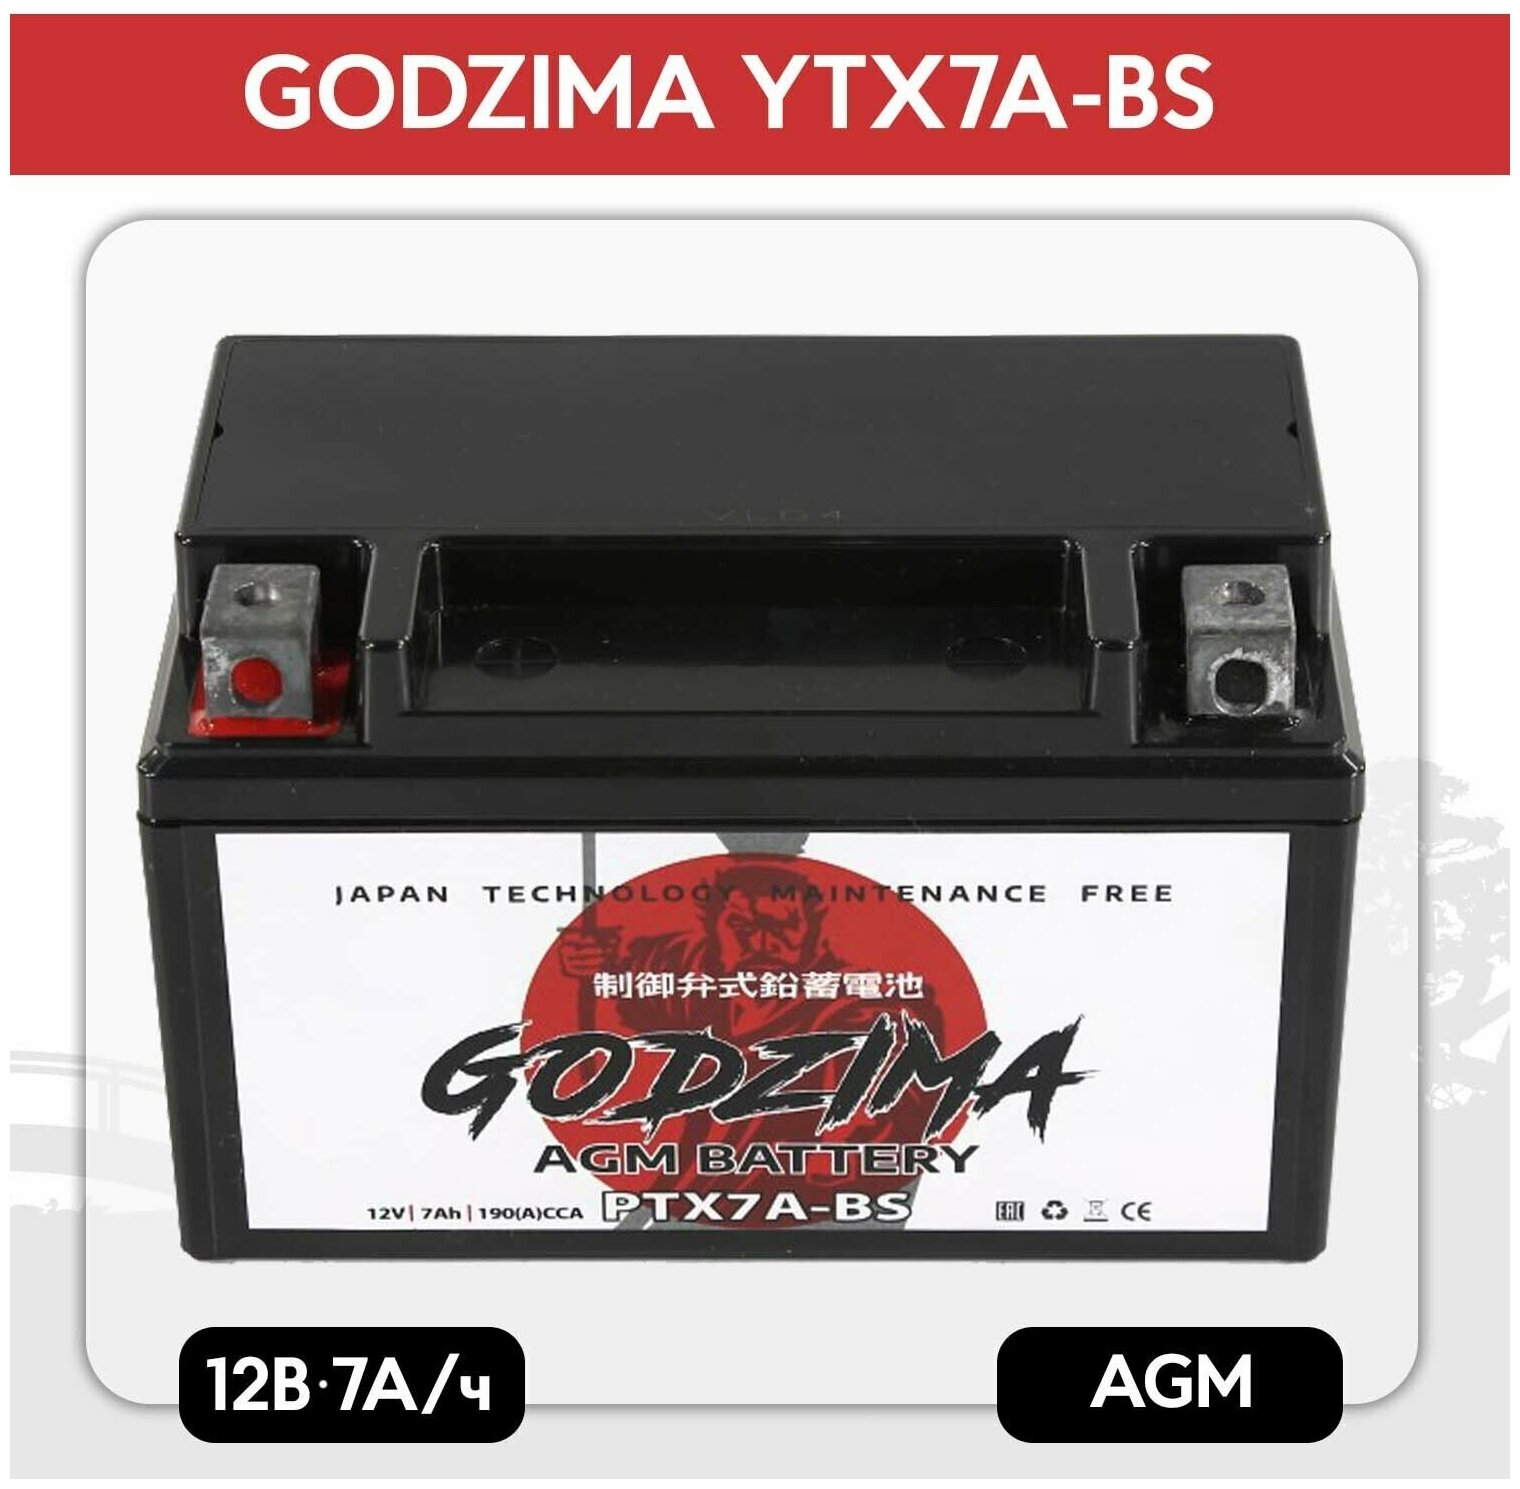 Мото аккумулятор Godzima GTX7A-BS (YTX7A-BS) стартерный для мотоцикла, квадроцикла, скутера AGM 12V 7 а/ч